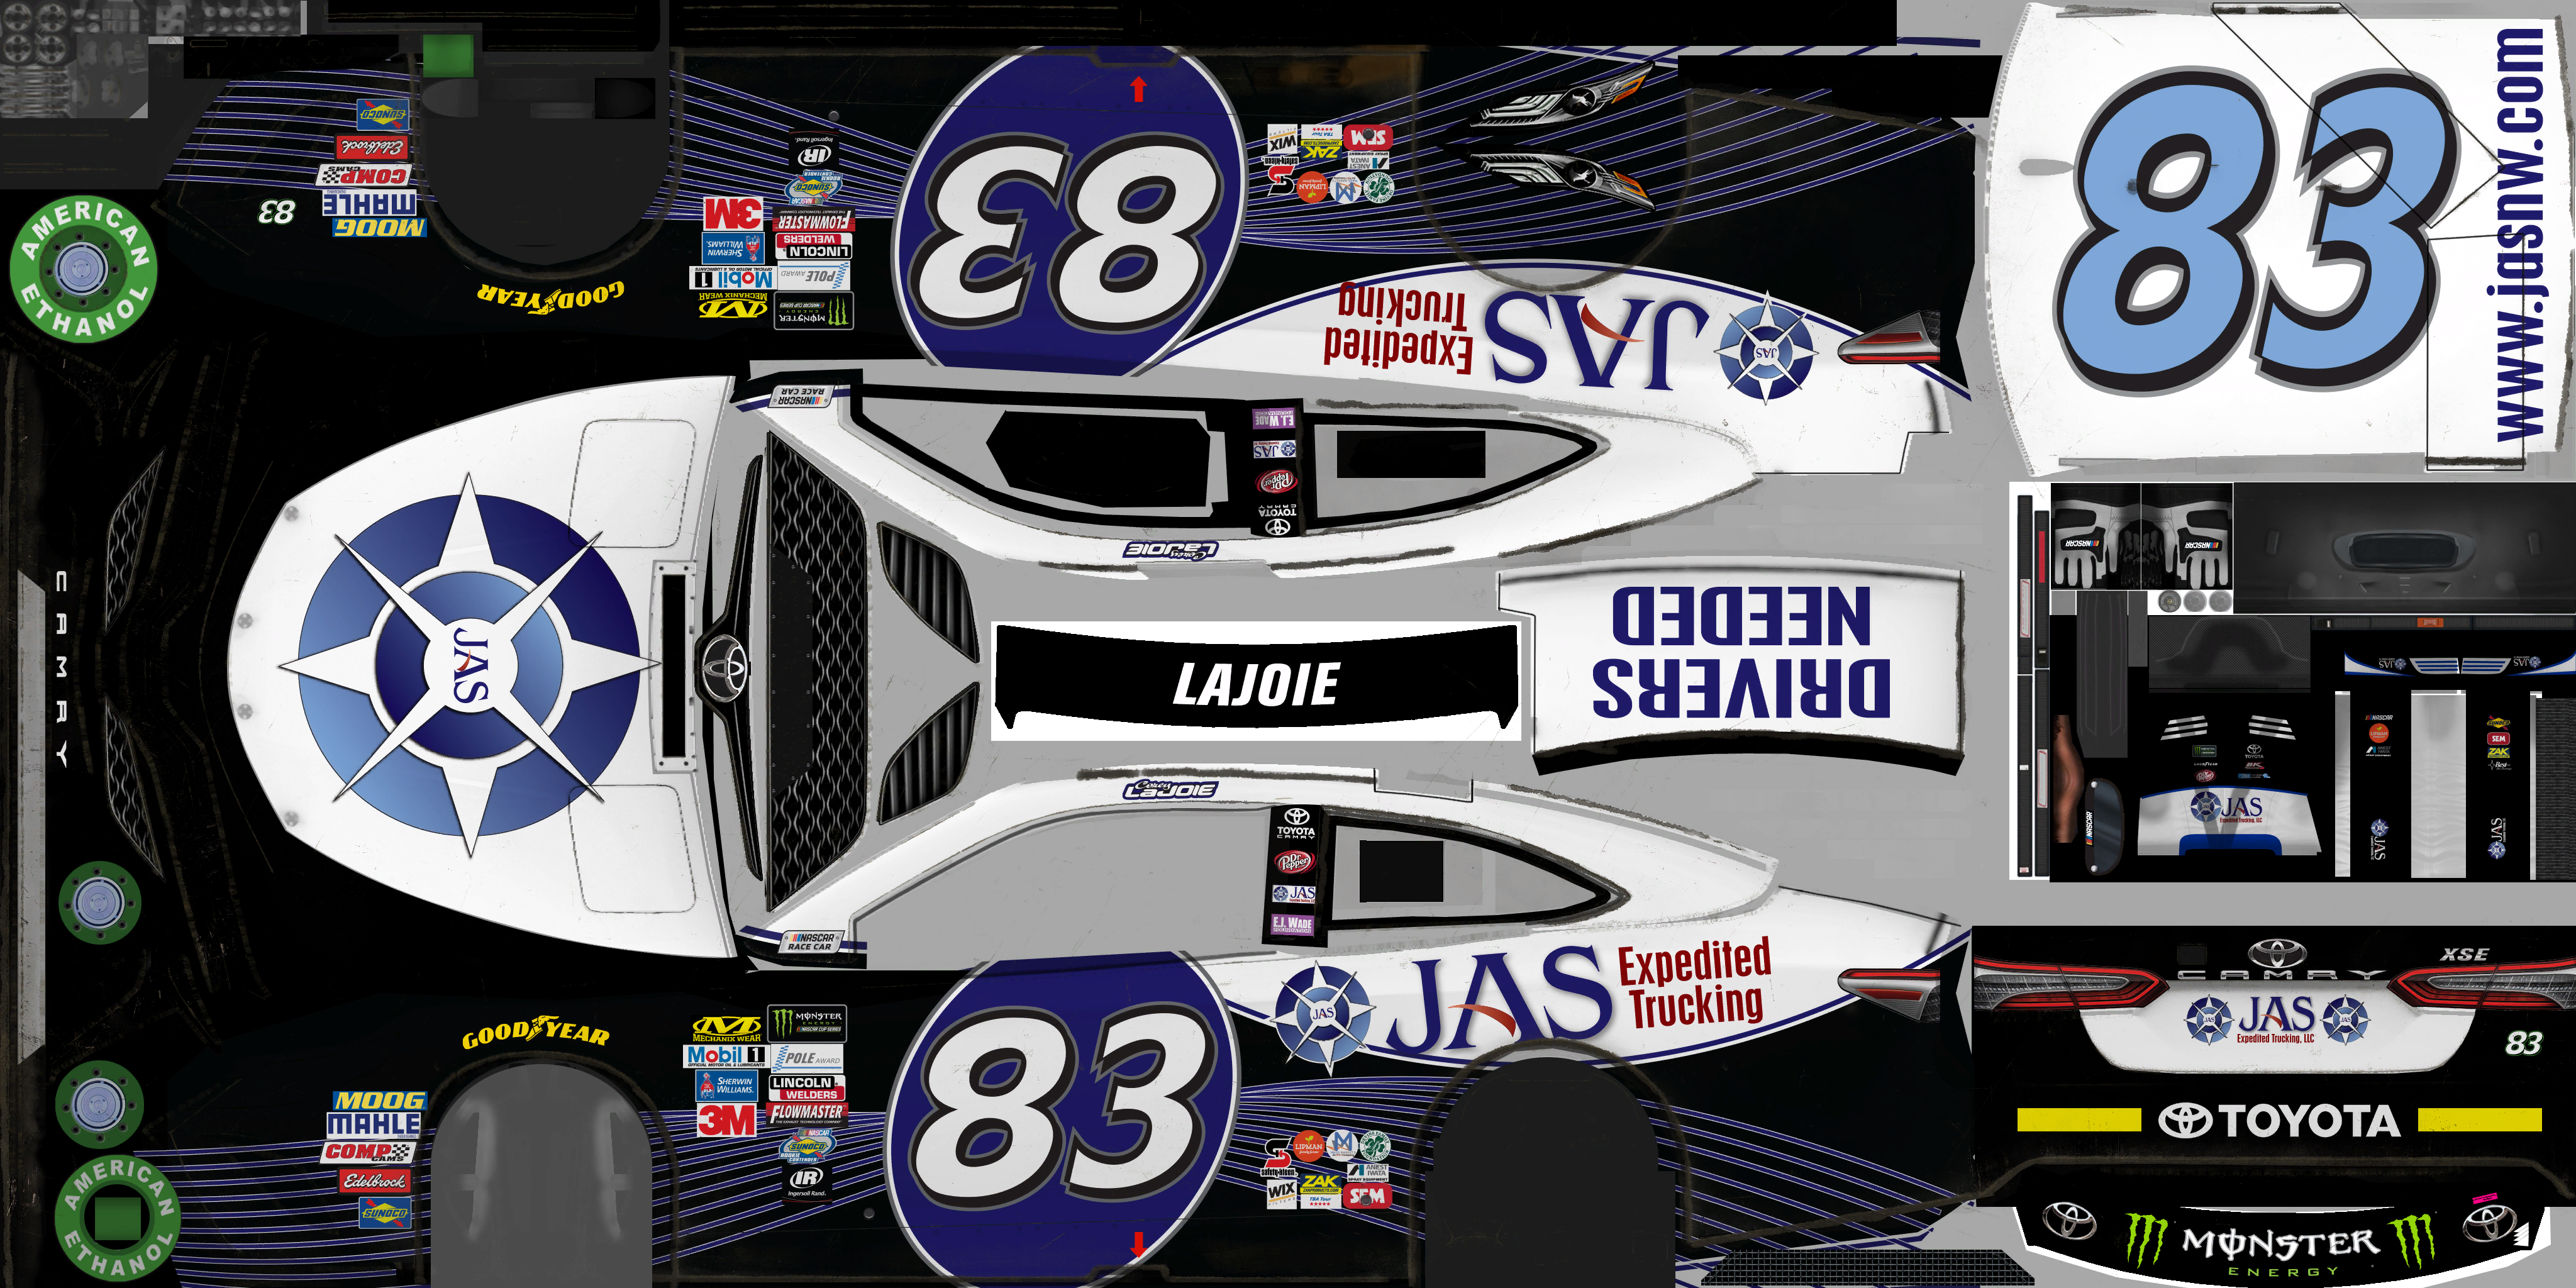 NASCAR Heat 2 - #83 Corey Lajoie (Las Vegas)